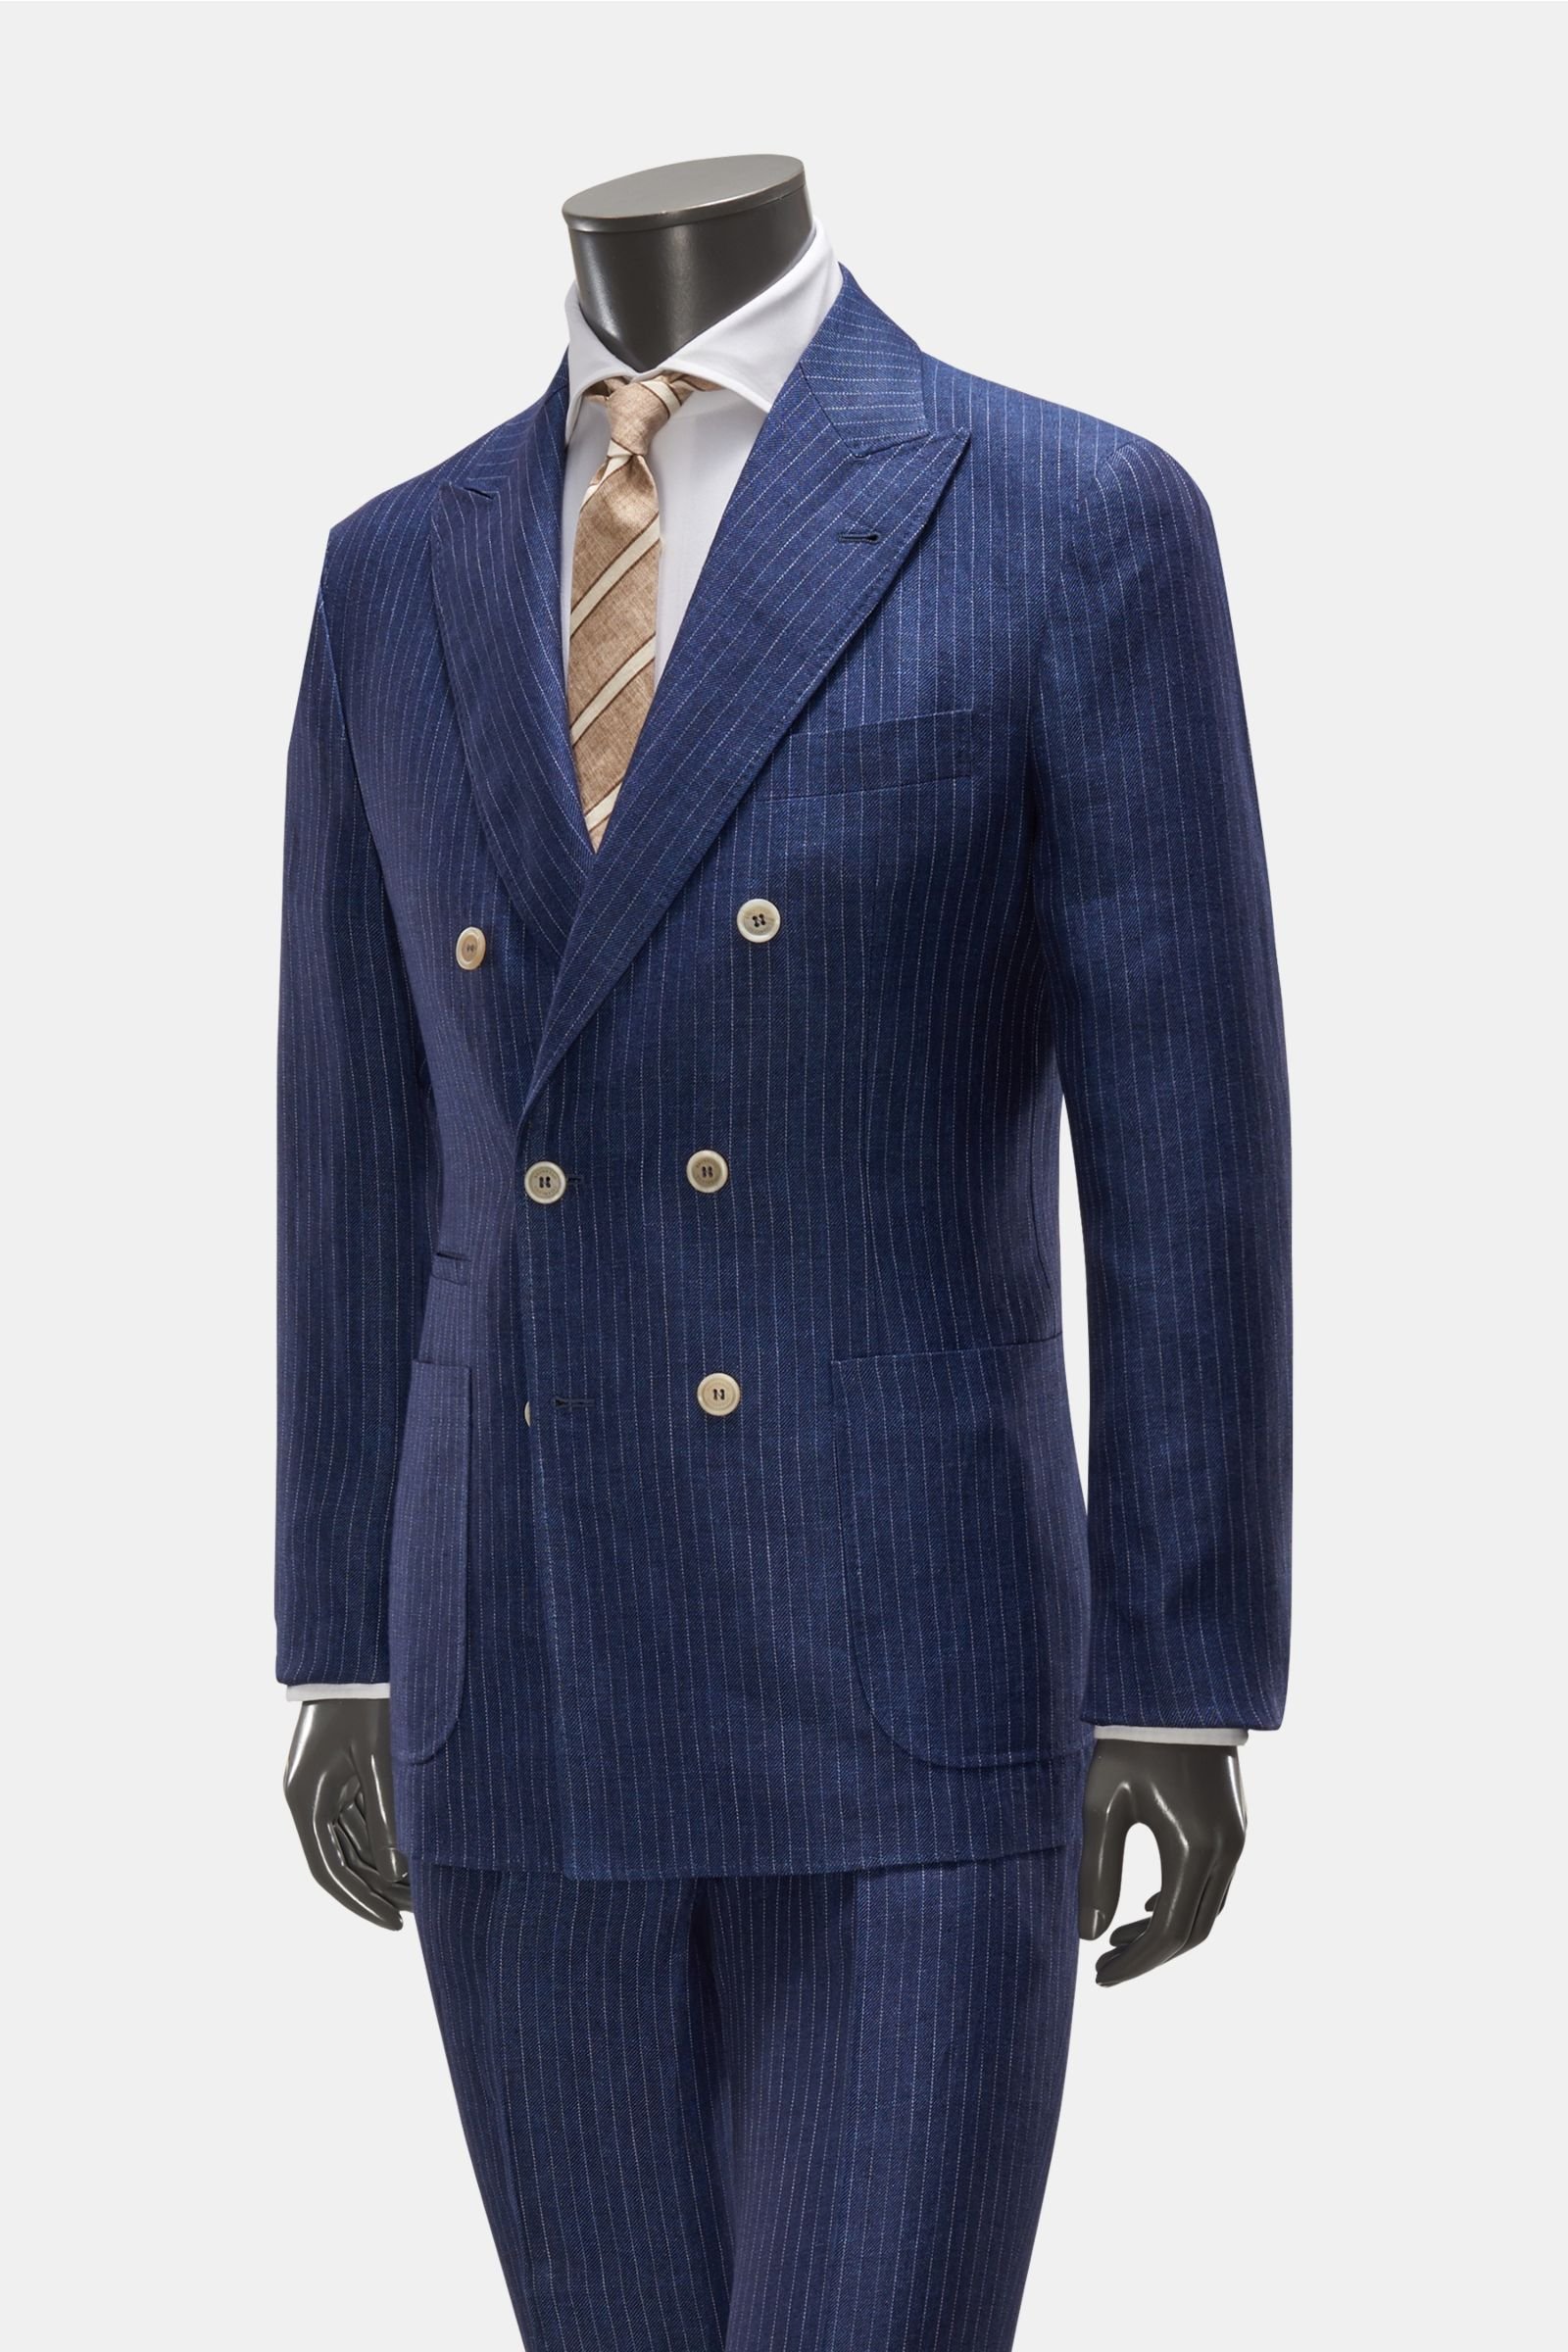 Linen suit dark blue striped